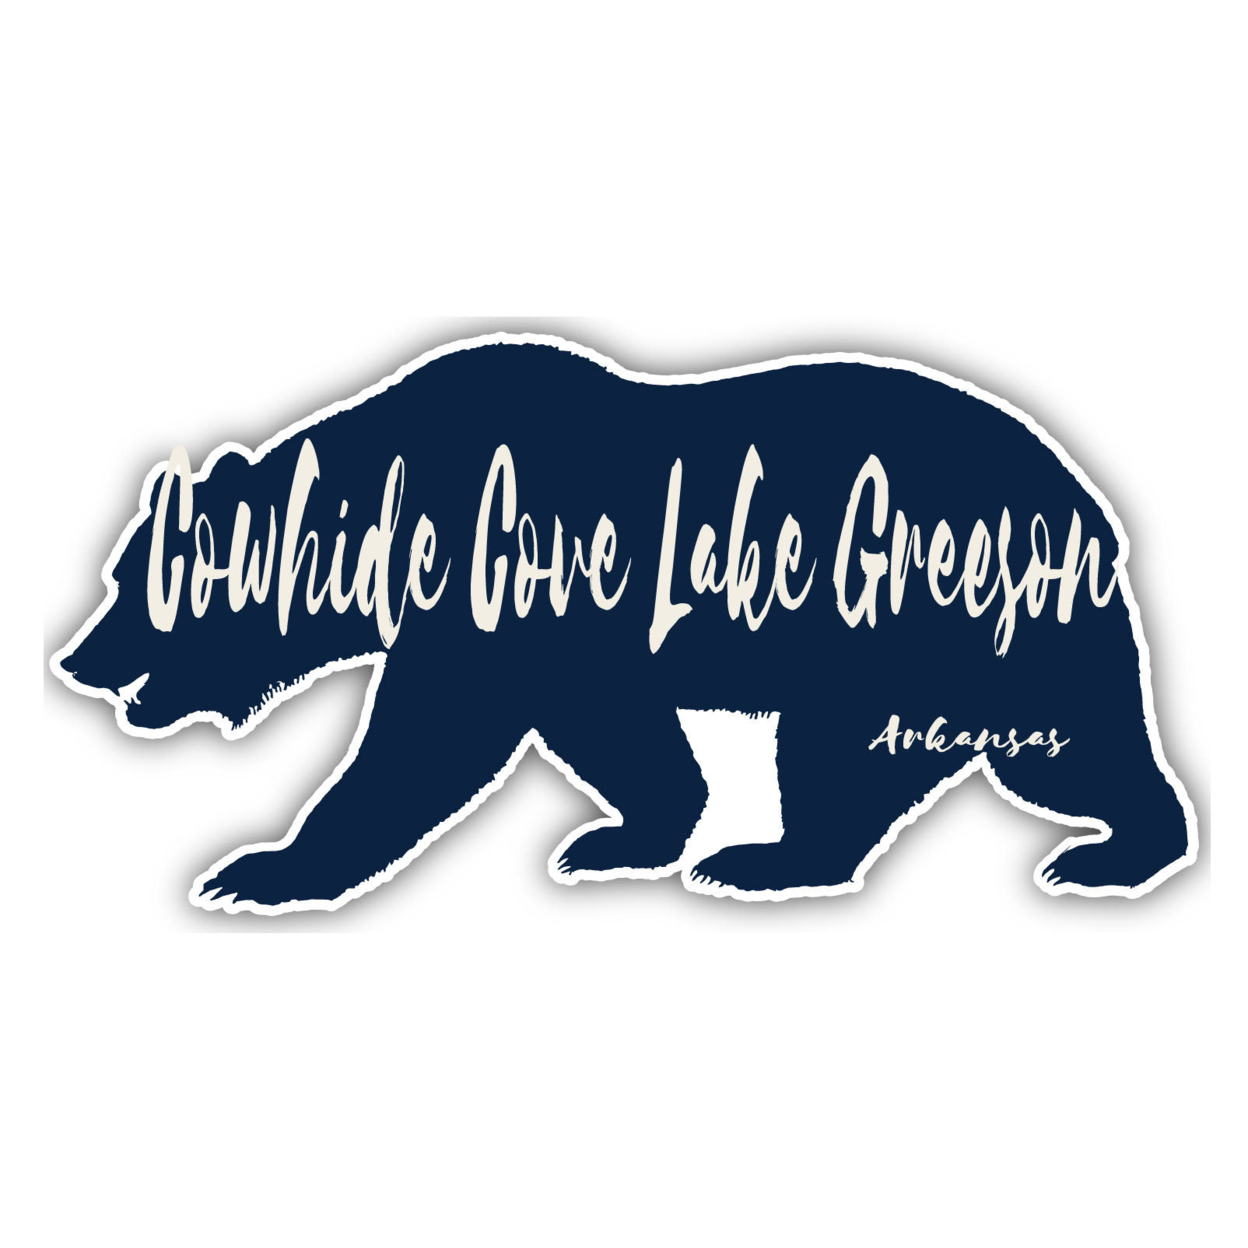 Cowhide Cove Lake Greeson Arkansas Souvenir Decorative Stickers (Choose Theme And Size) - Single Unit, 6-Inch, Bear